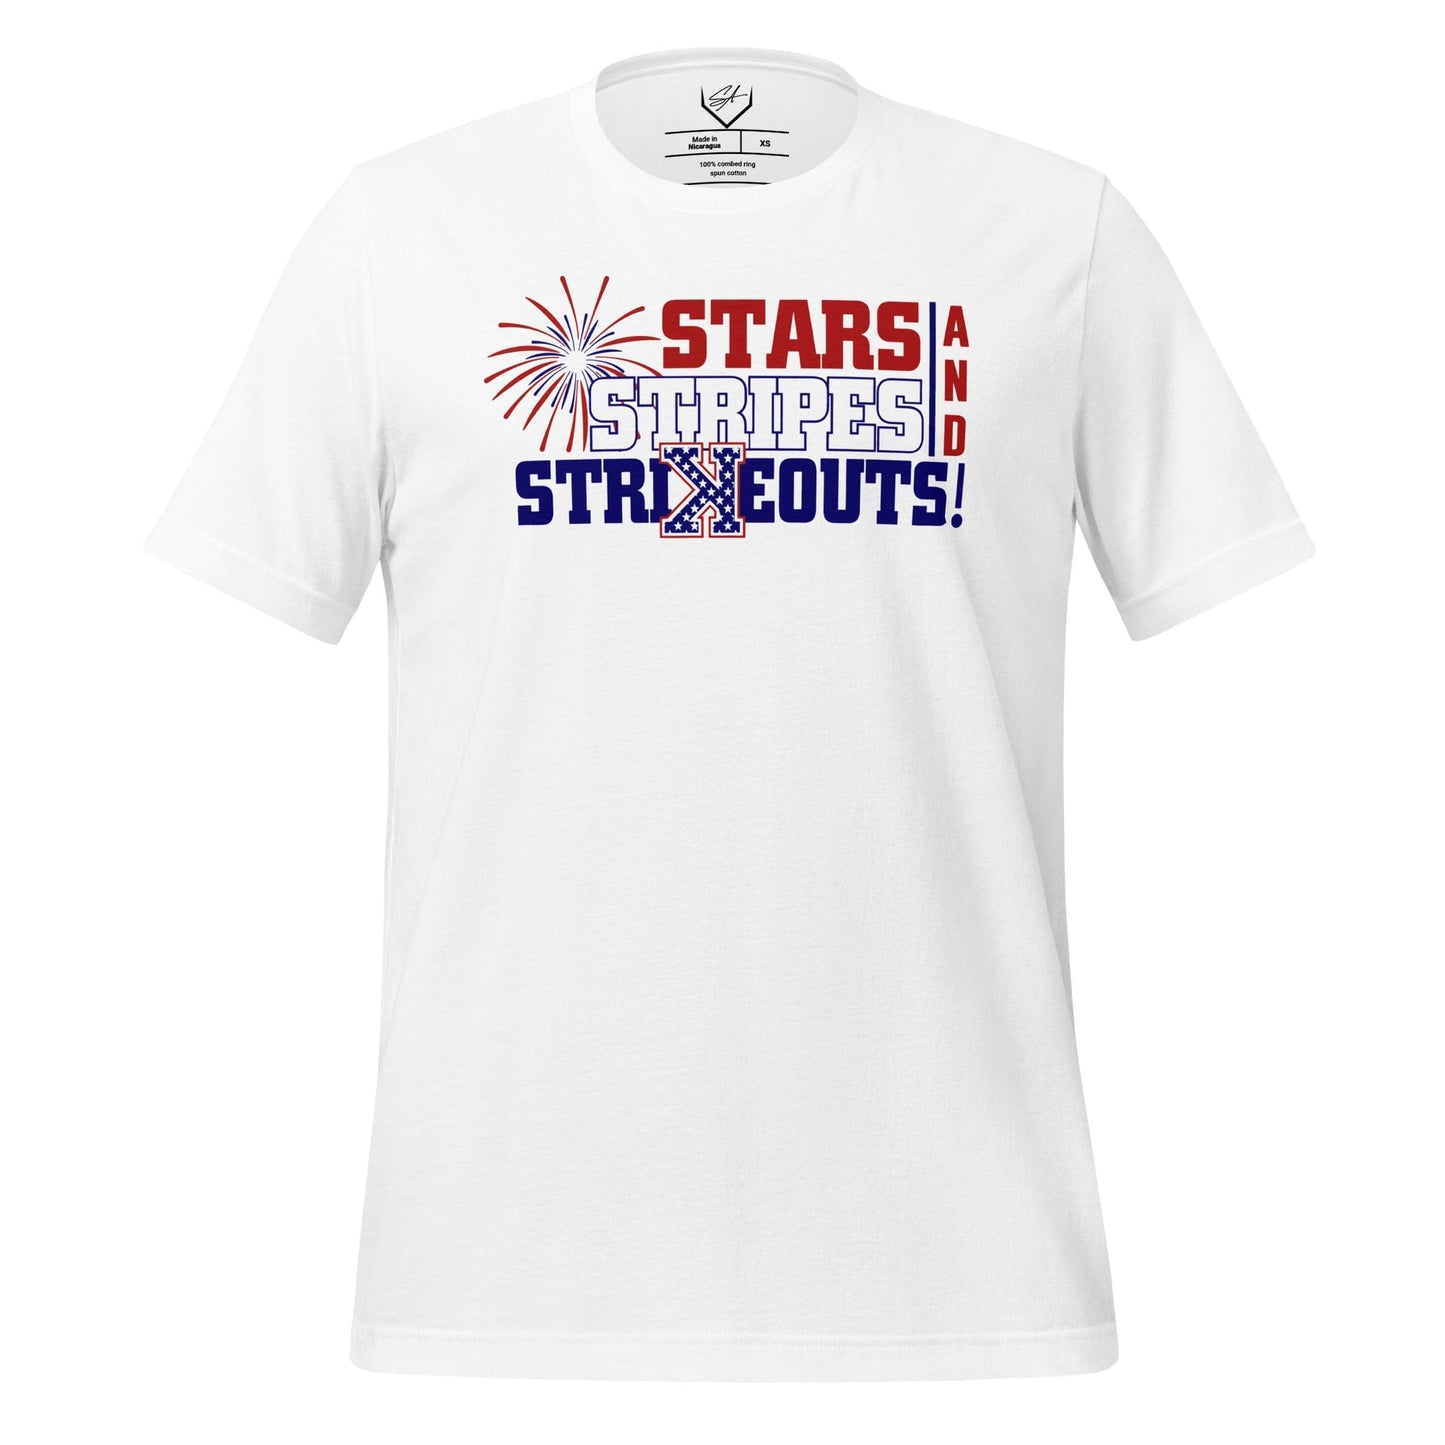 Stars, Stripes, & Strikeouts - Adult Tee